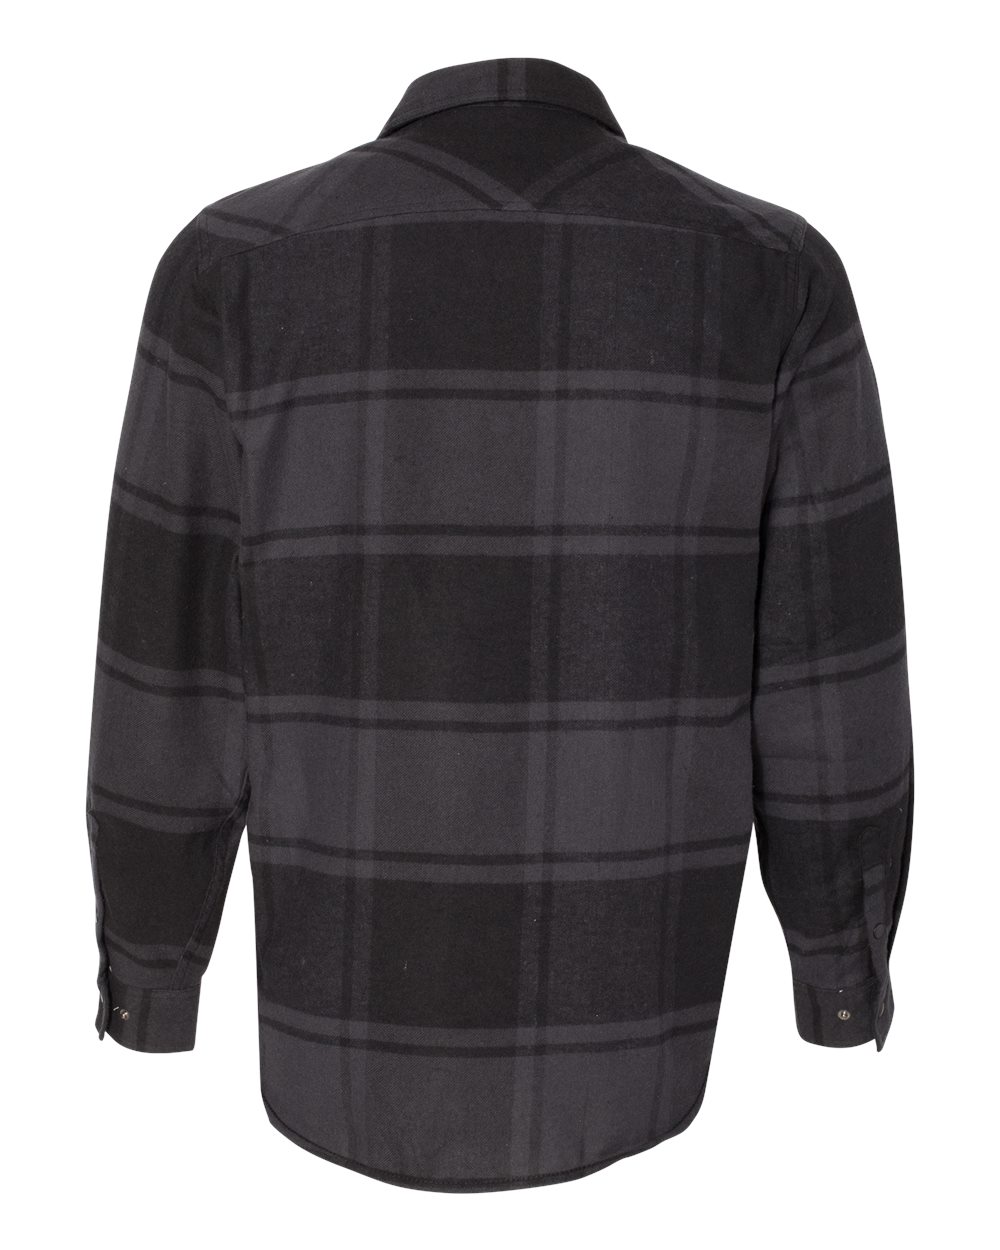 'Burnside 8219 Snap Front Long Sleeve Plaid Flannel Shirt'